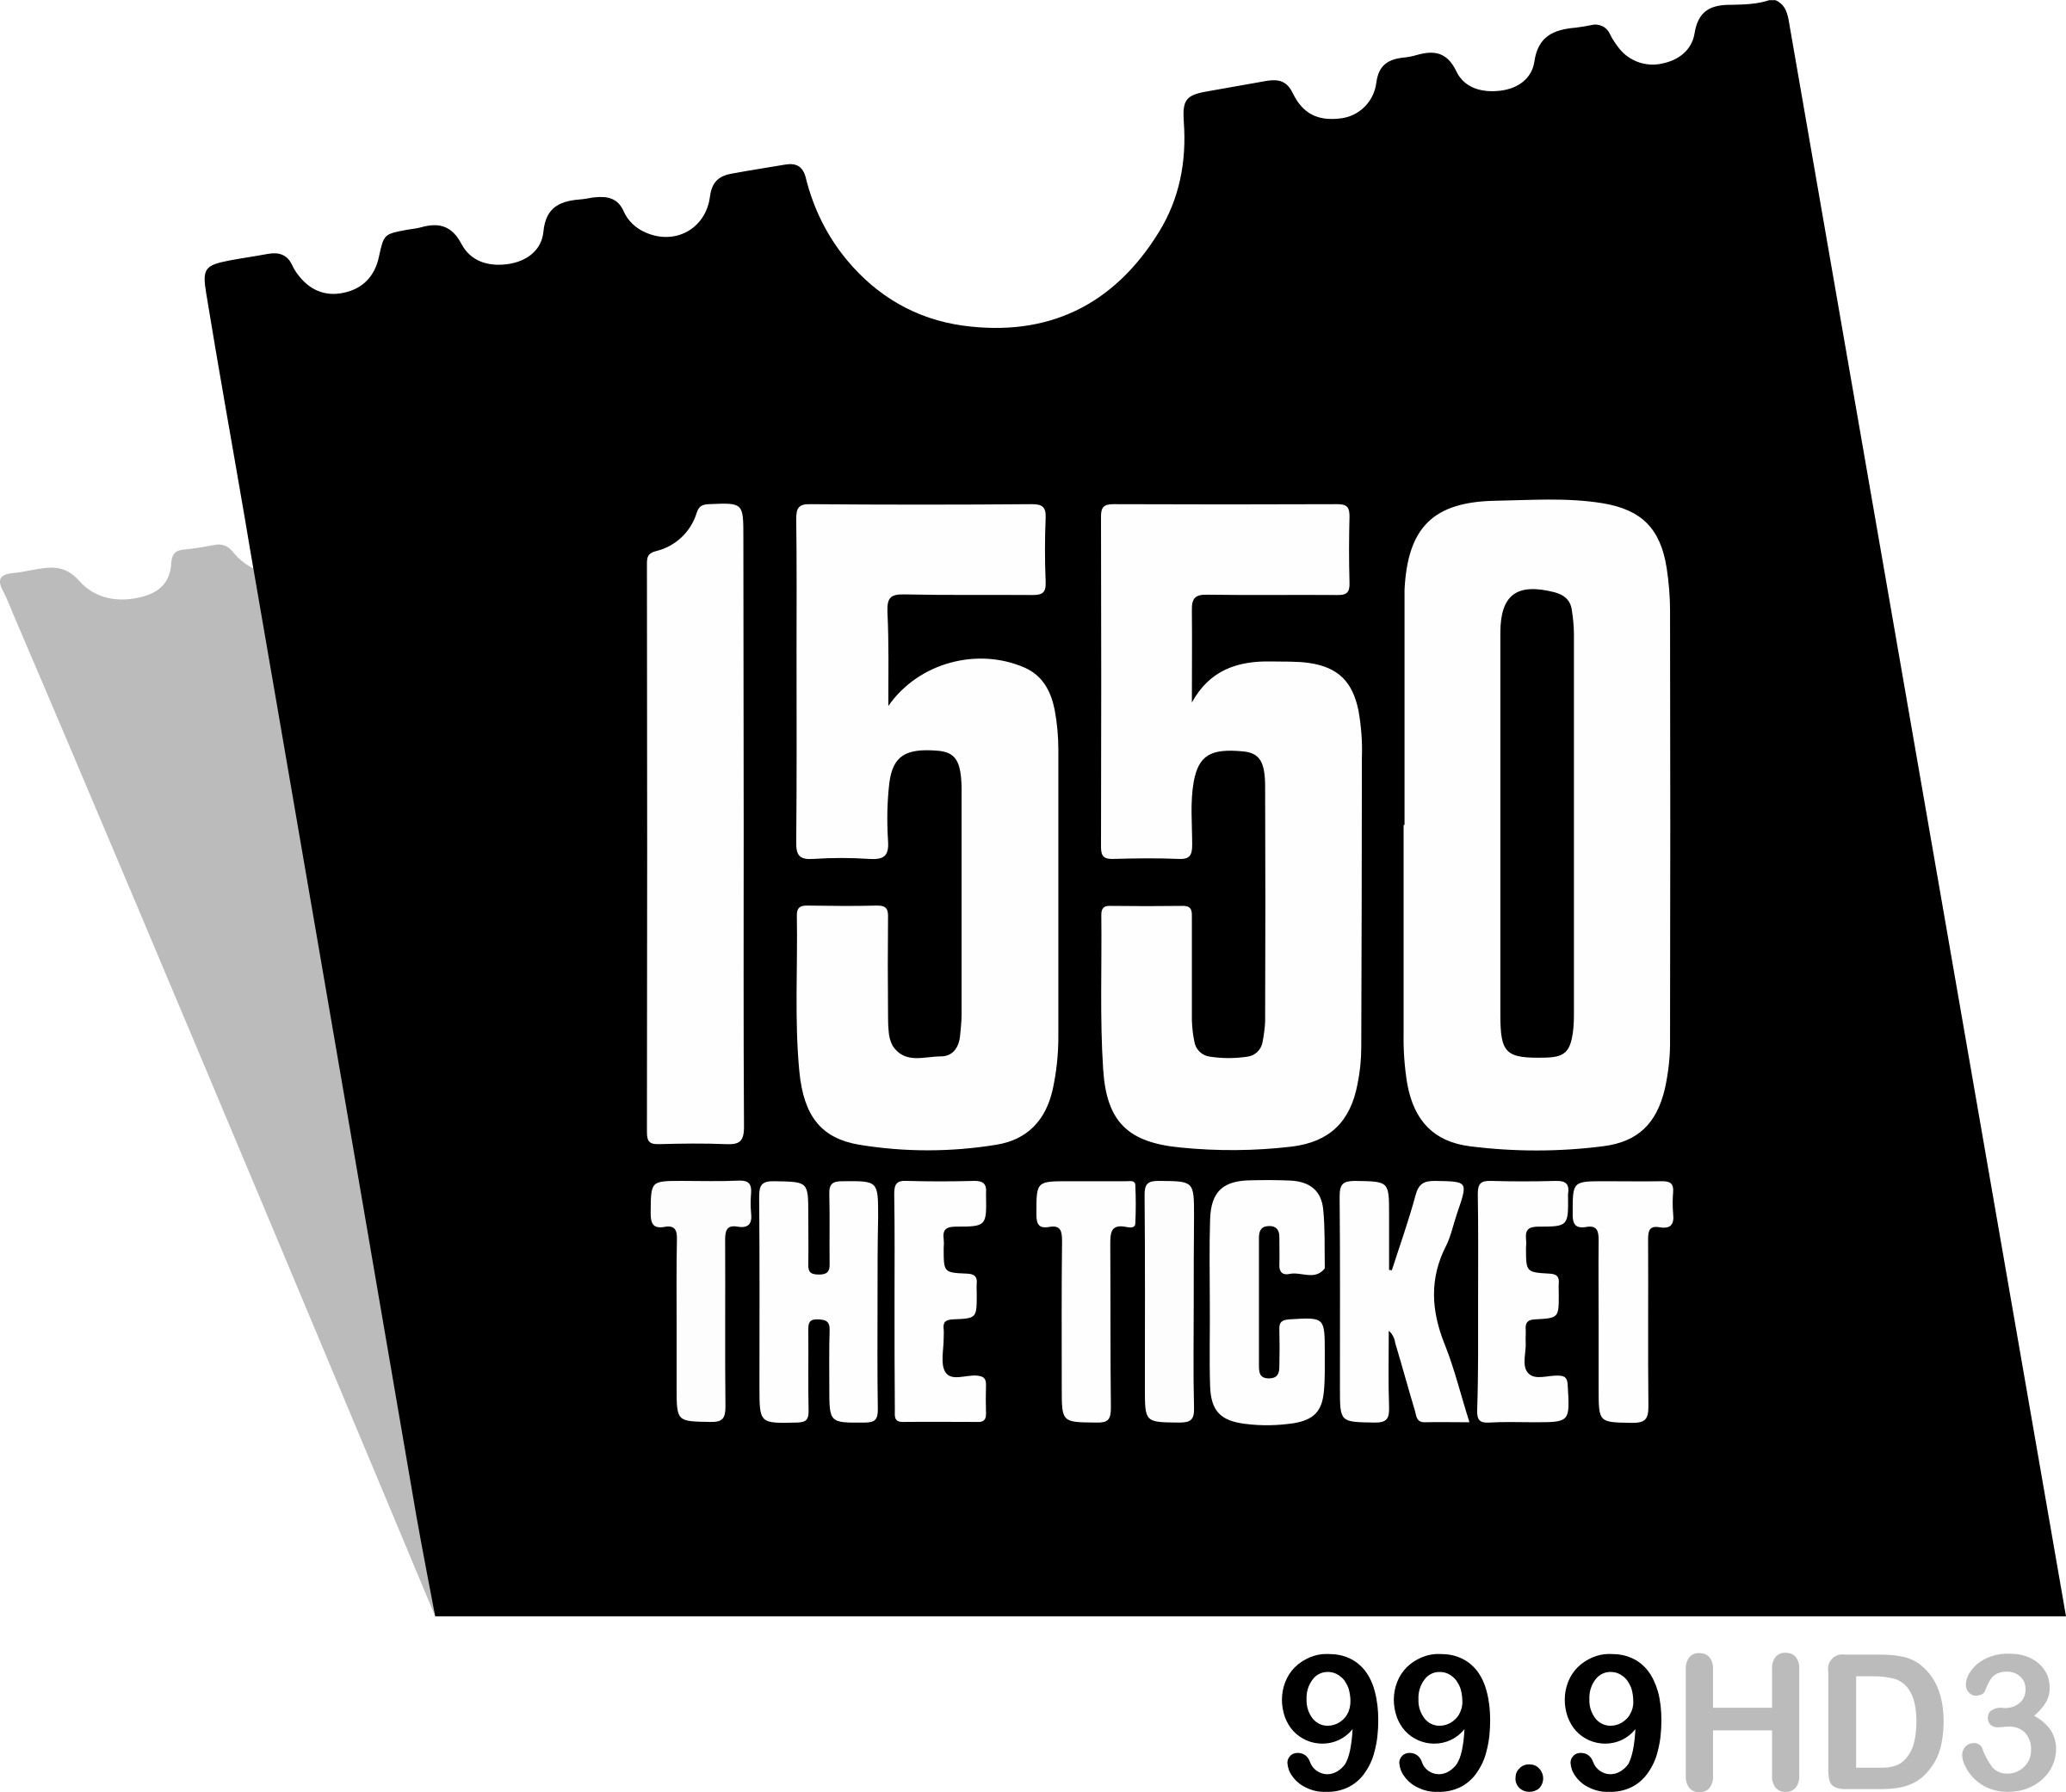 Ticket Logo - 1550 The Ticket Logo PNG Transparent & SVG Vector - Freebie Supply